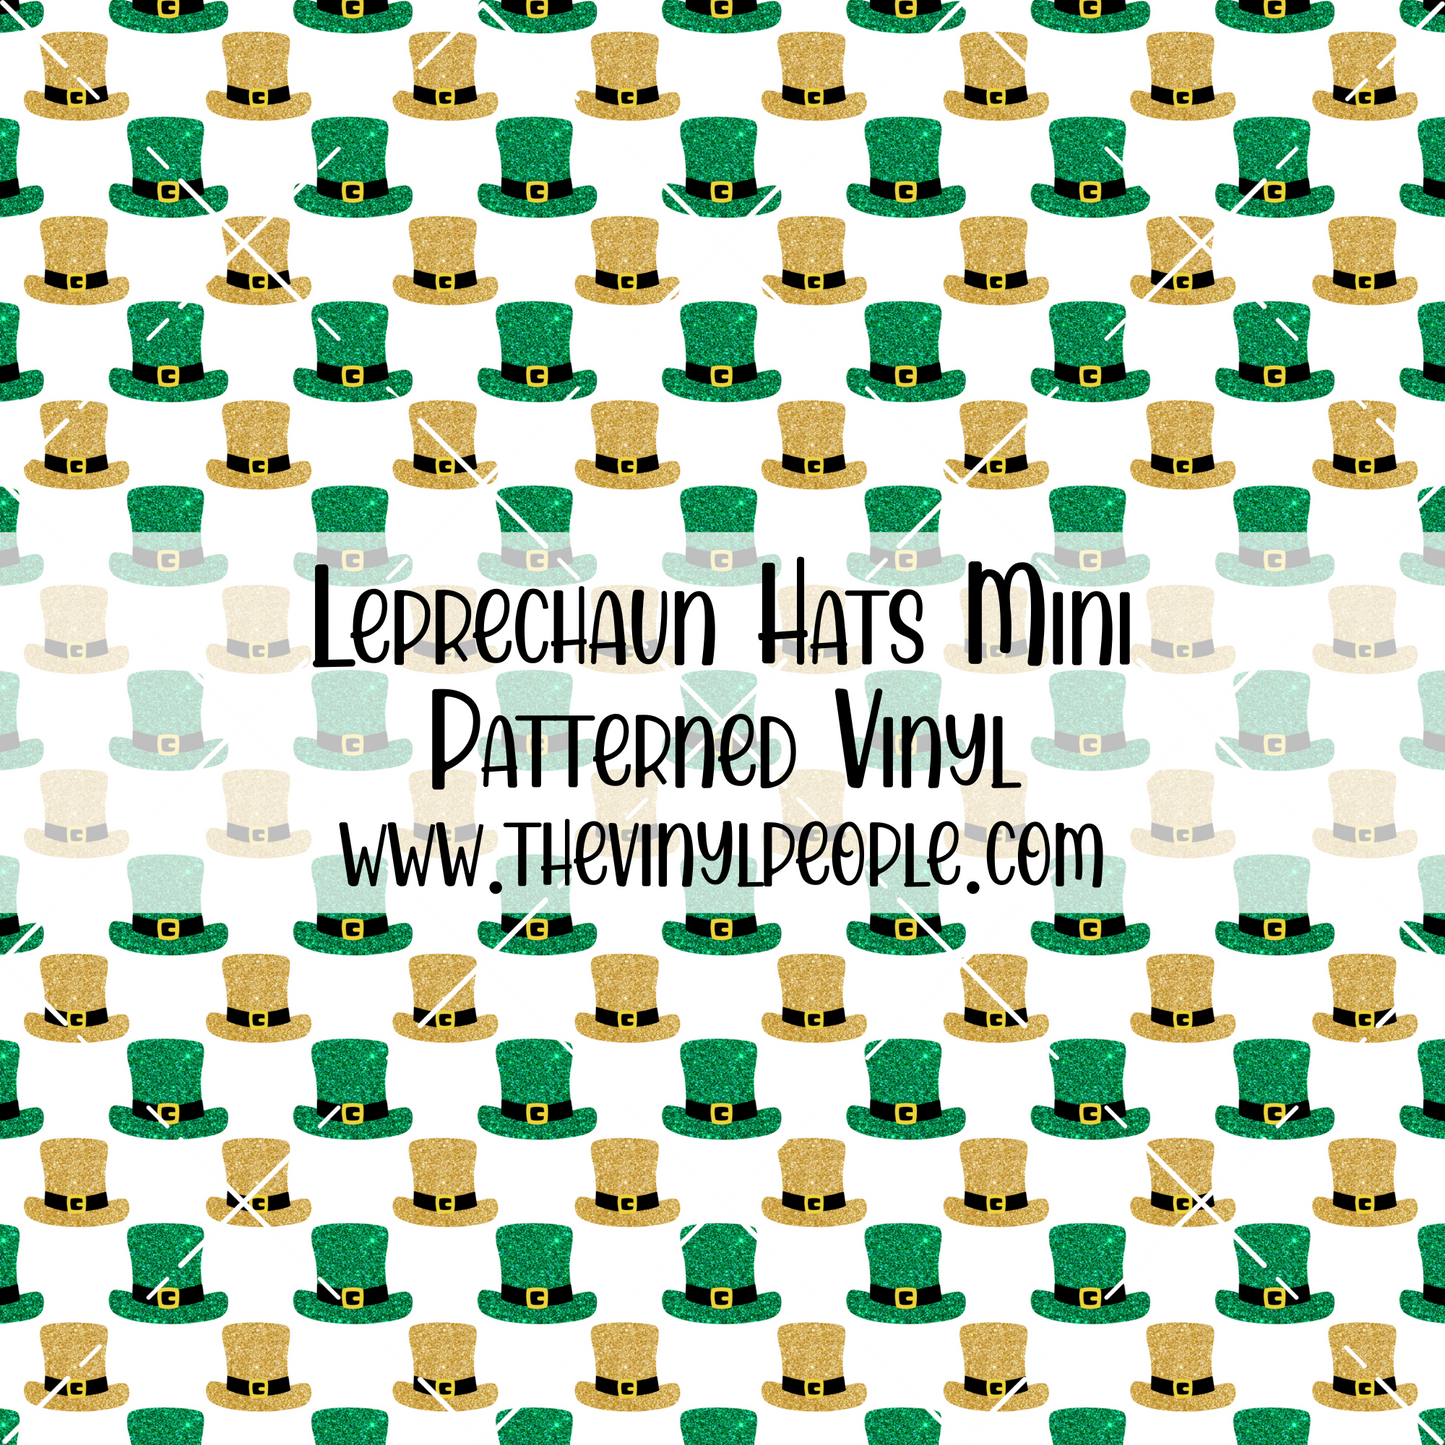 Leprechaun Hats Patterned Vinyl